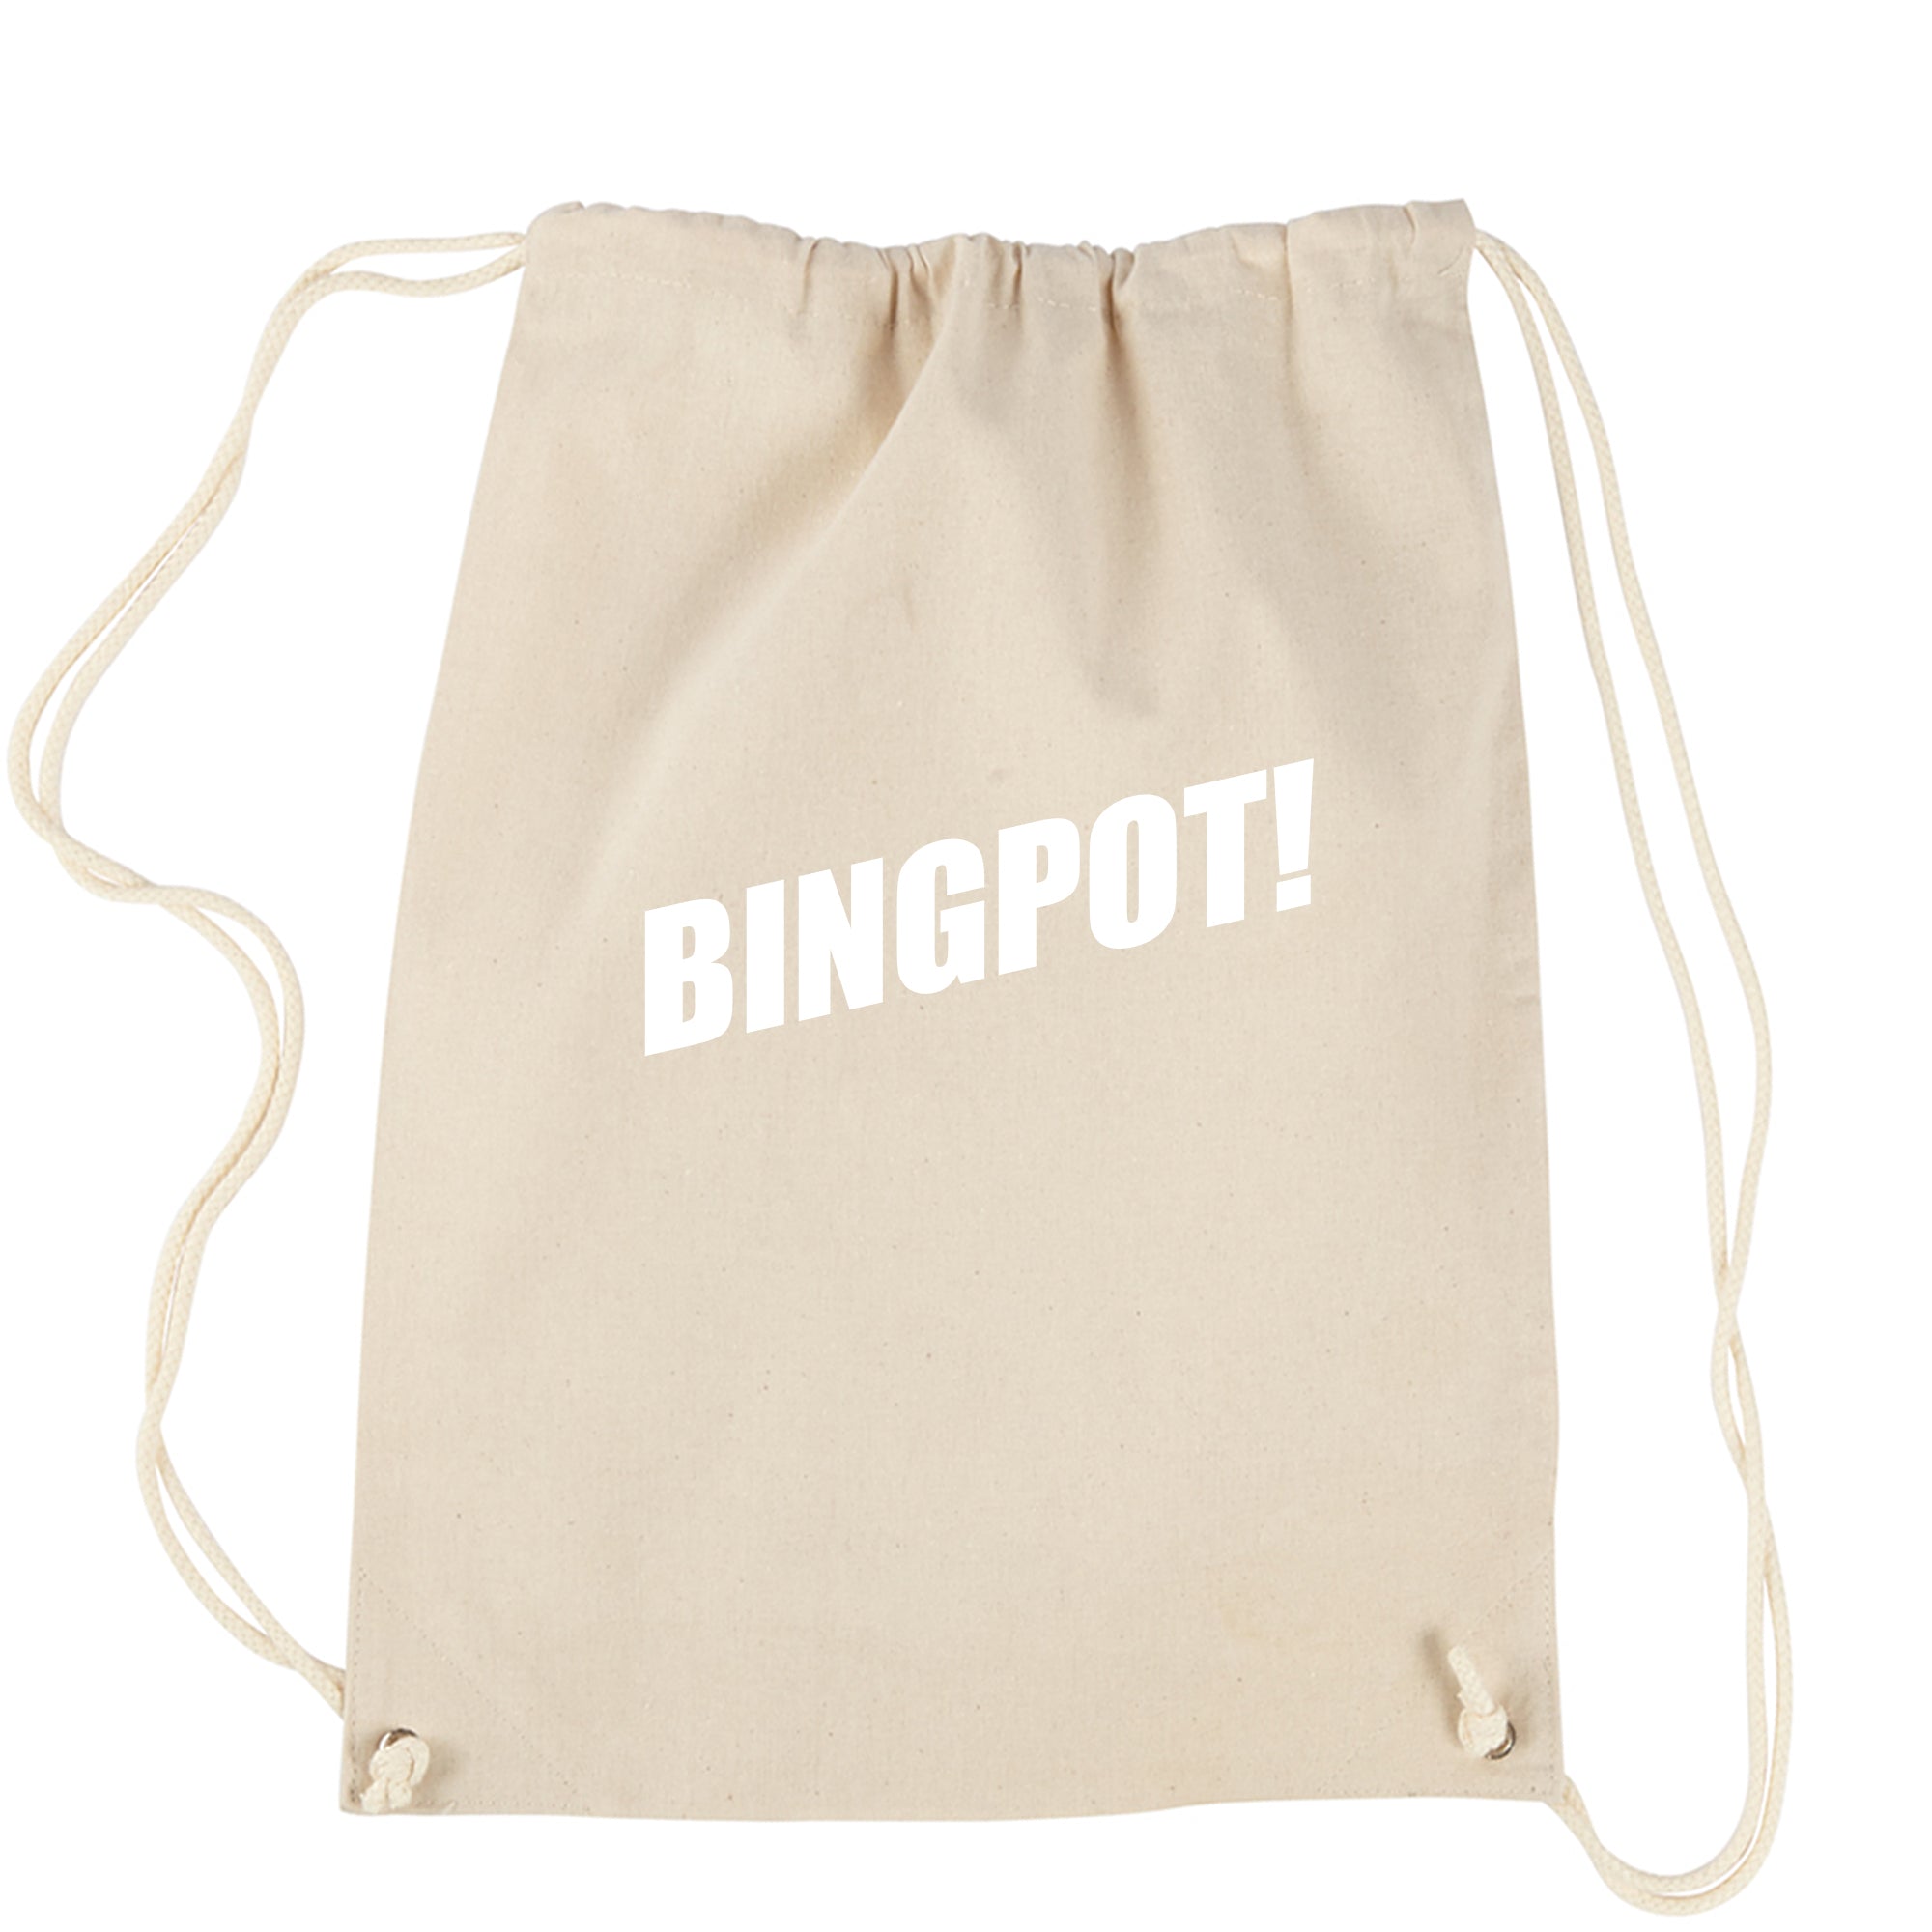 Bingpot! Funny Brooklyn 99 Drawstring Backpack